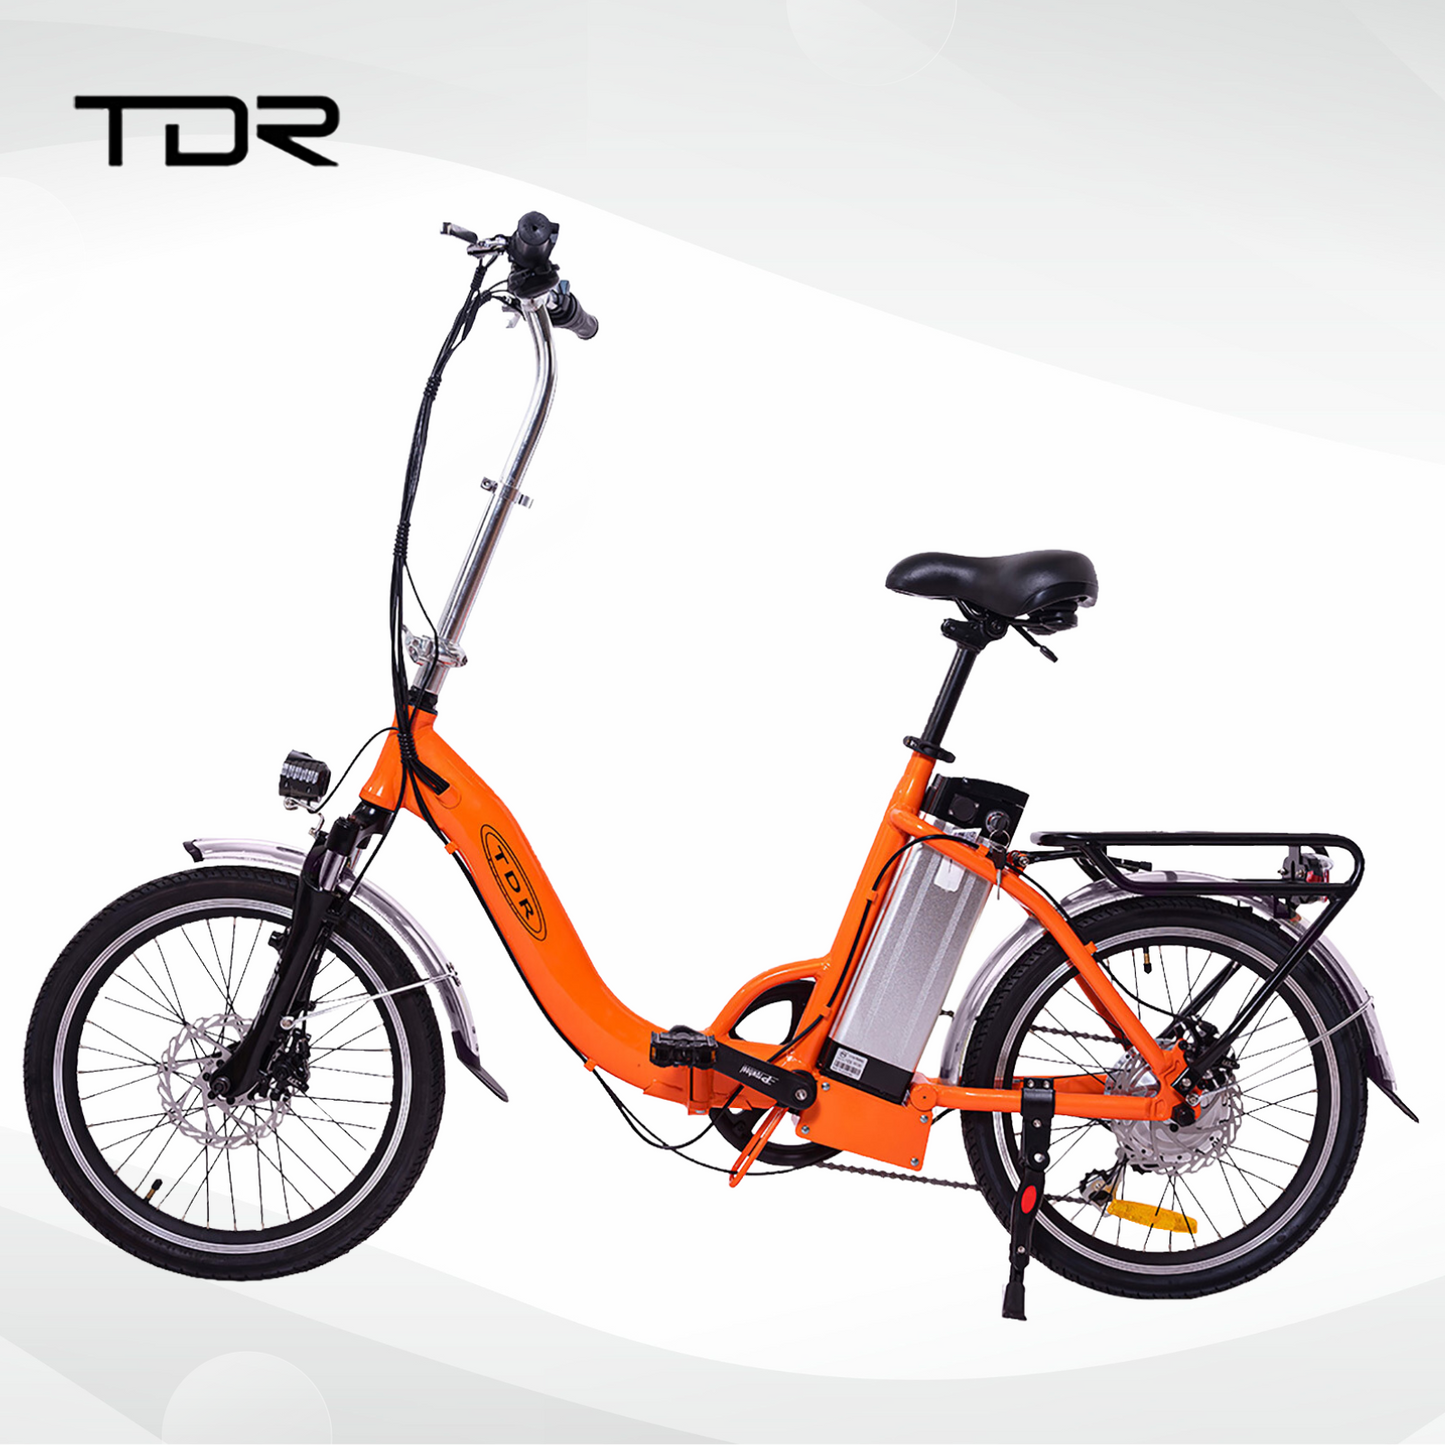 TDR 250W 20" Step-Through Orange Folding Electric Bike eBike Pedal Assist 10Ah/15Ah Battery